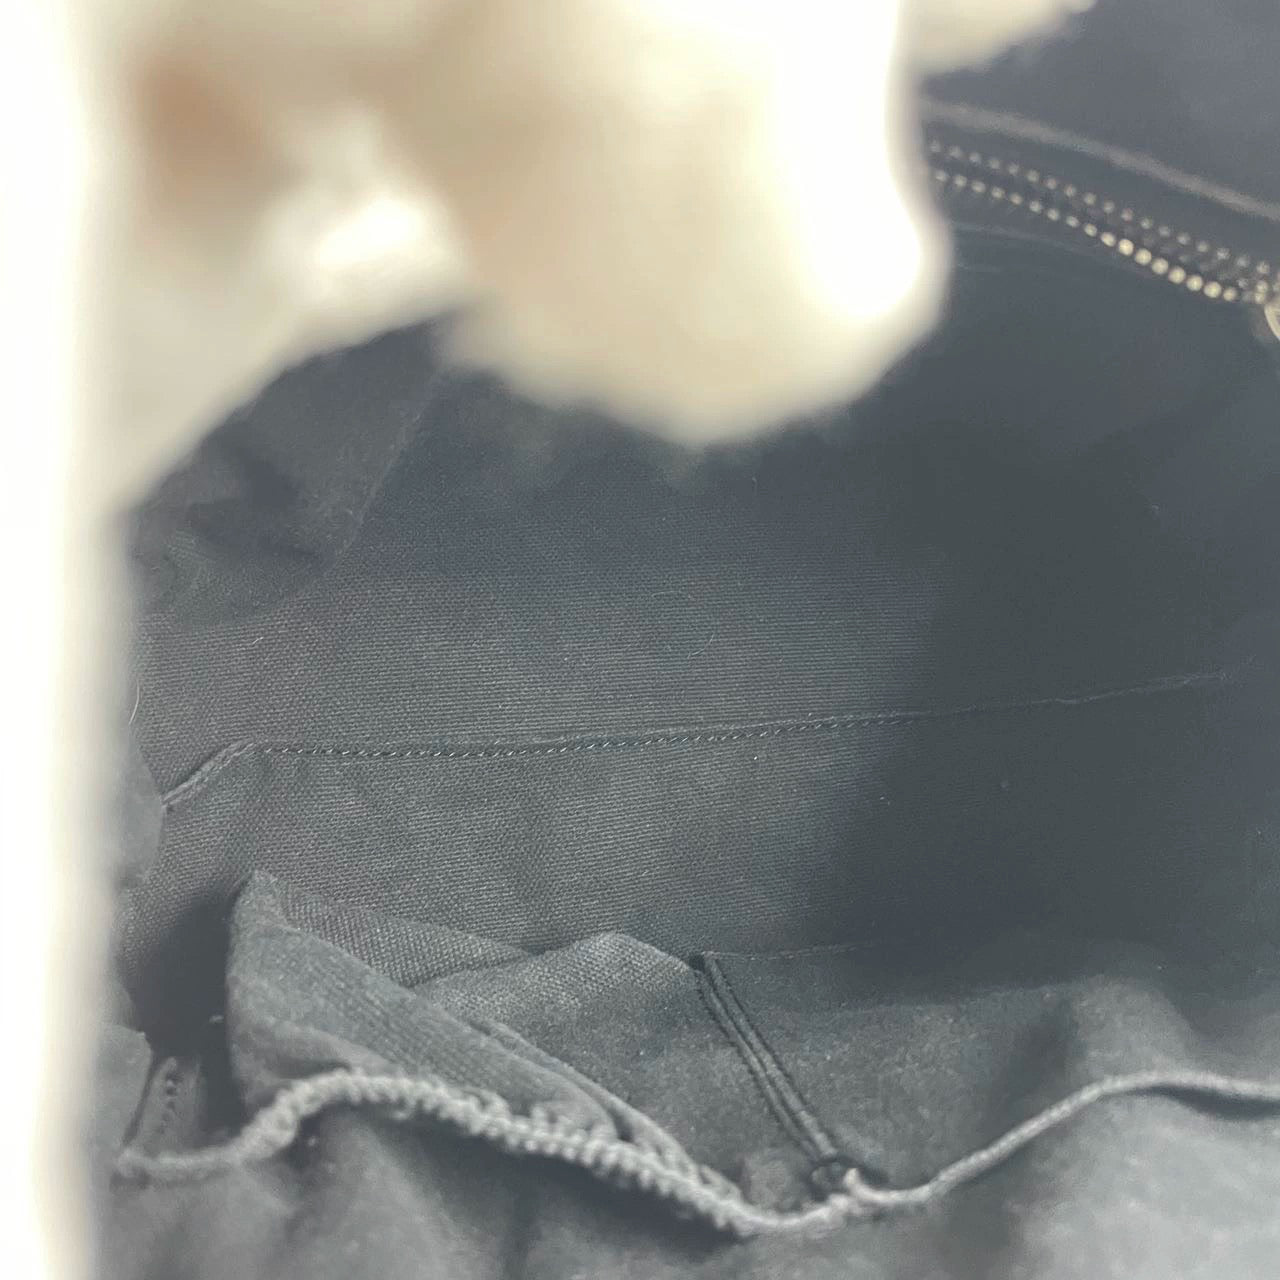 Givenchy Antigona Mini Black Calf Leather Top Handle bag with Strap